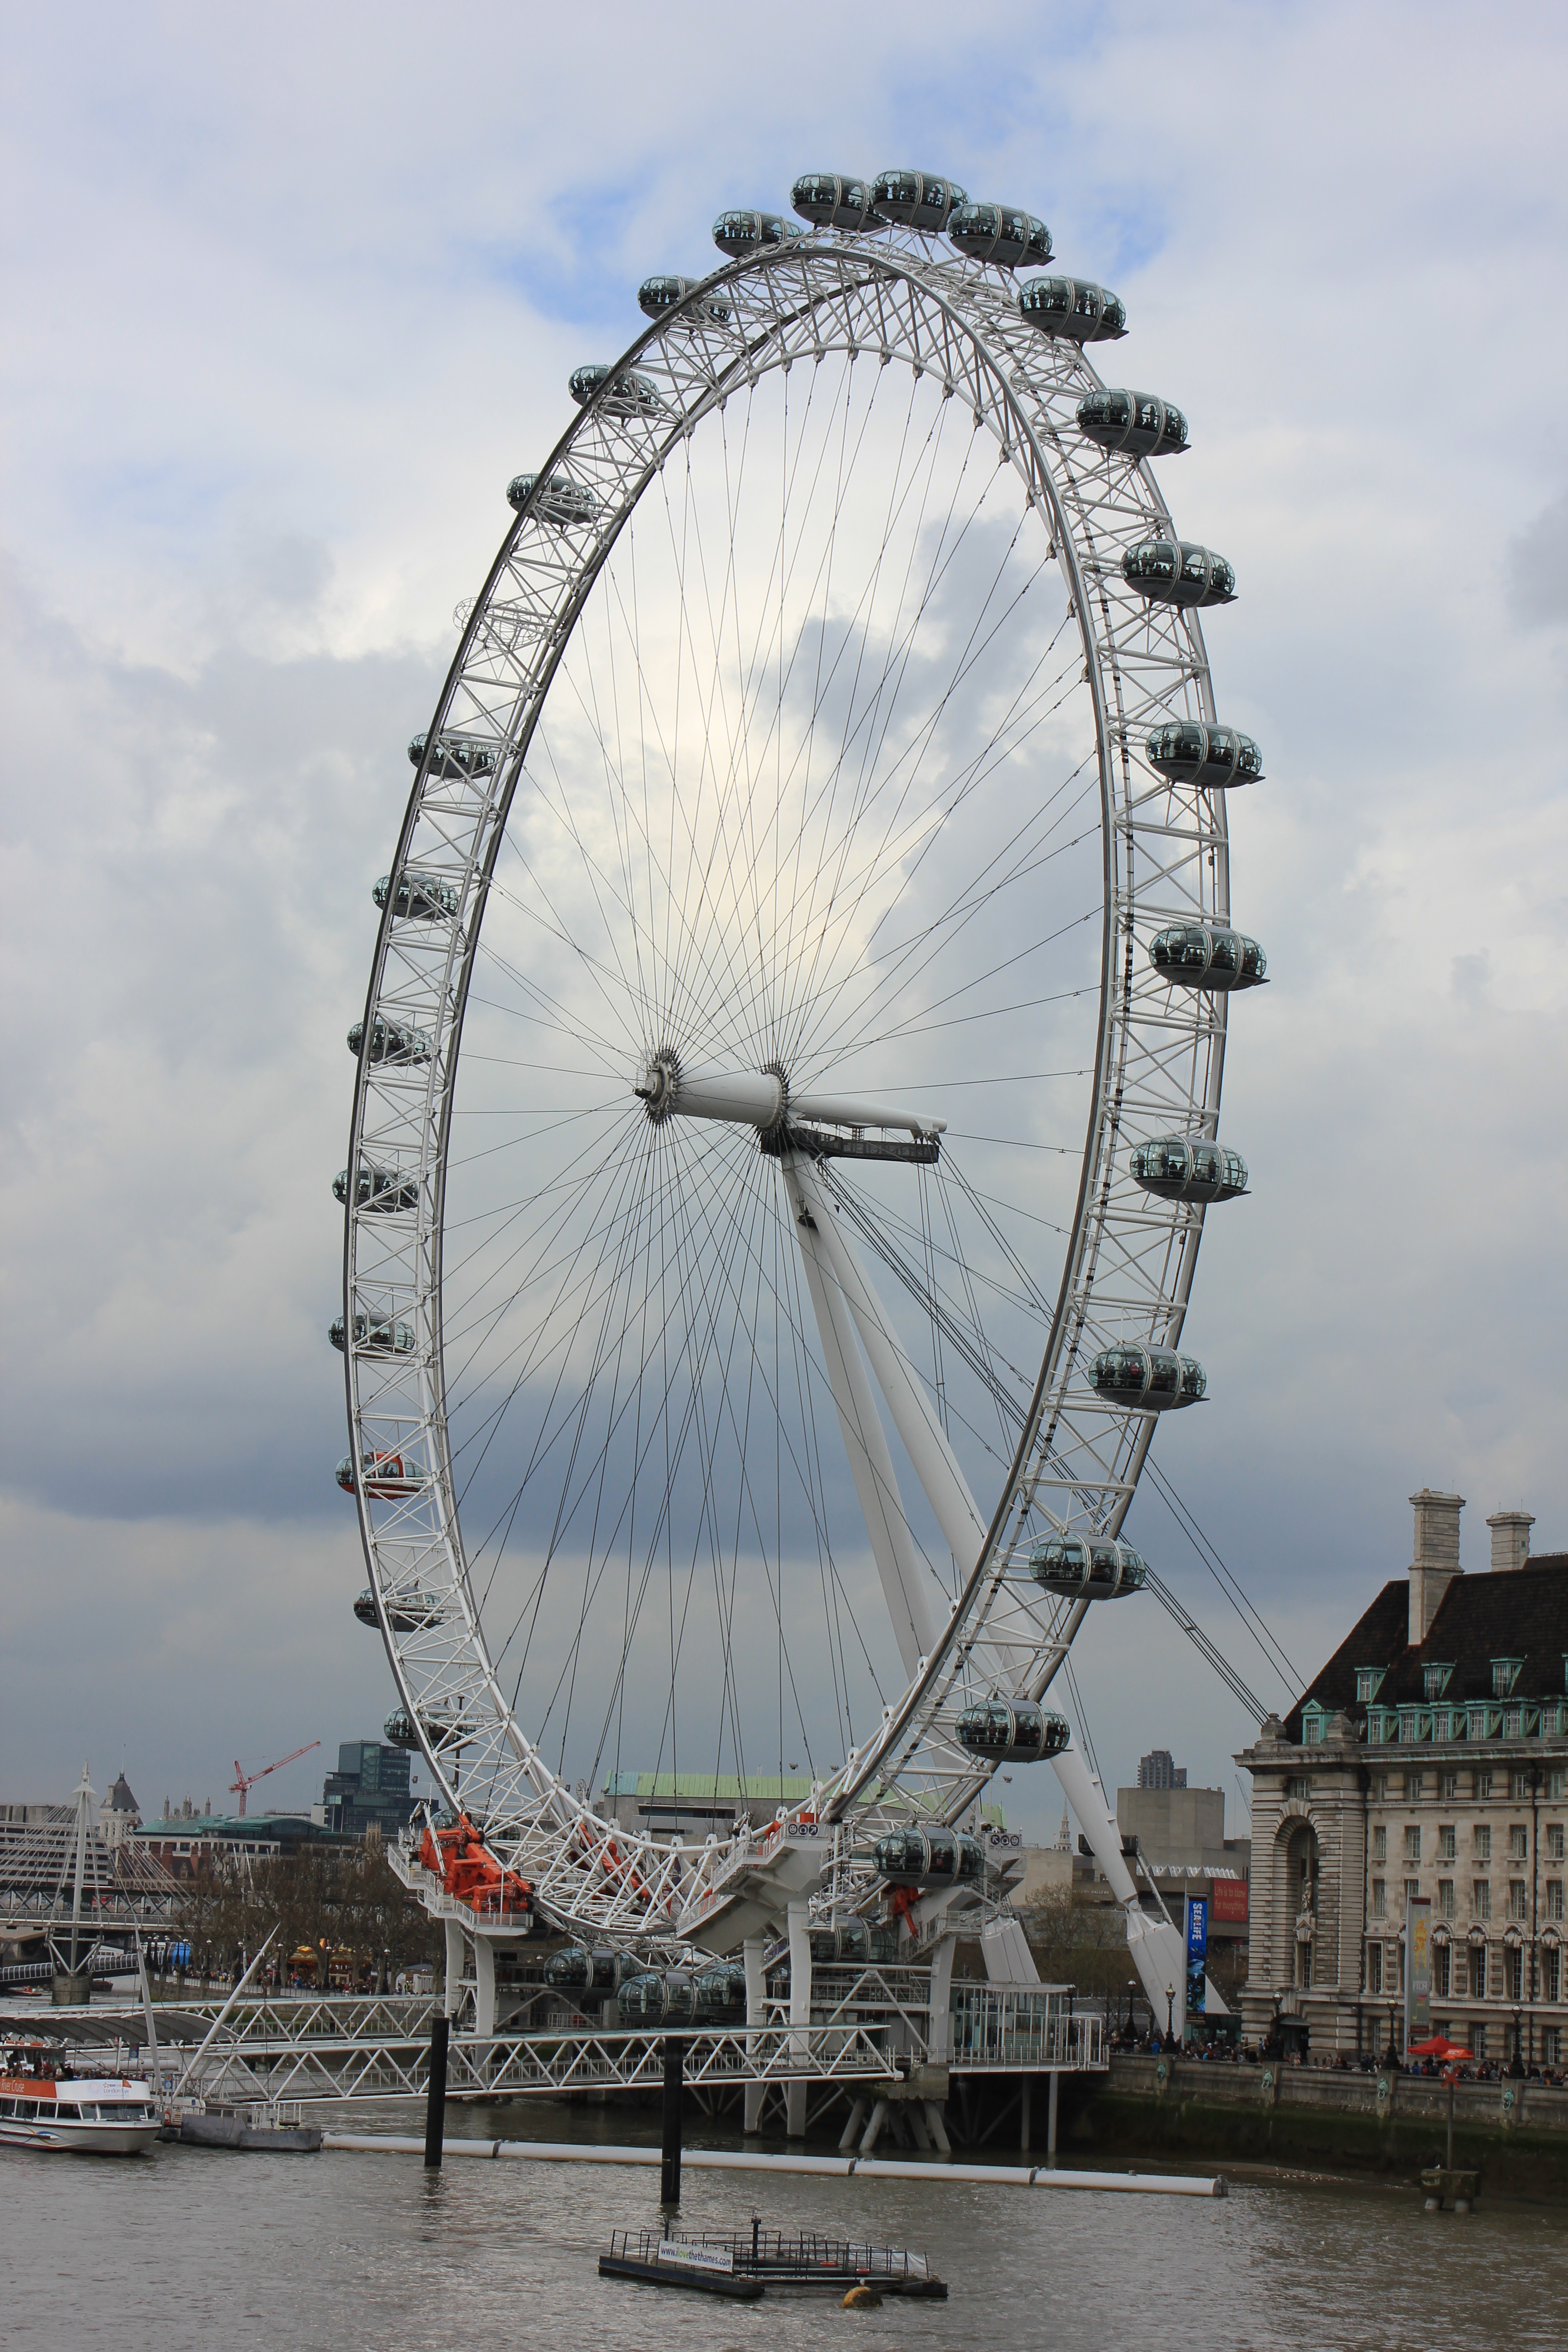 A Ferris Wheel Ride on the London Eye in England